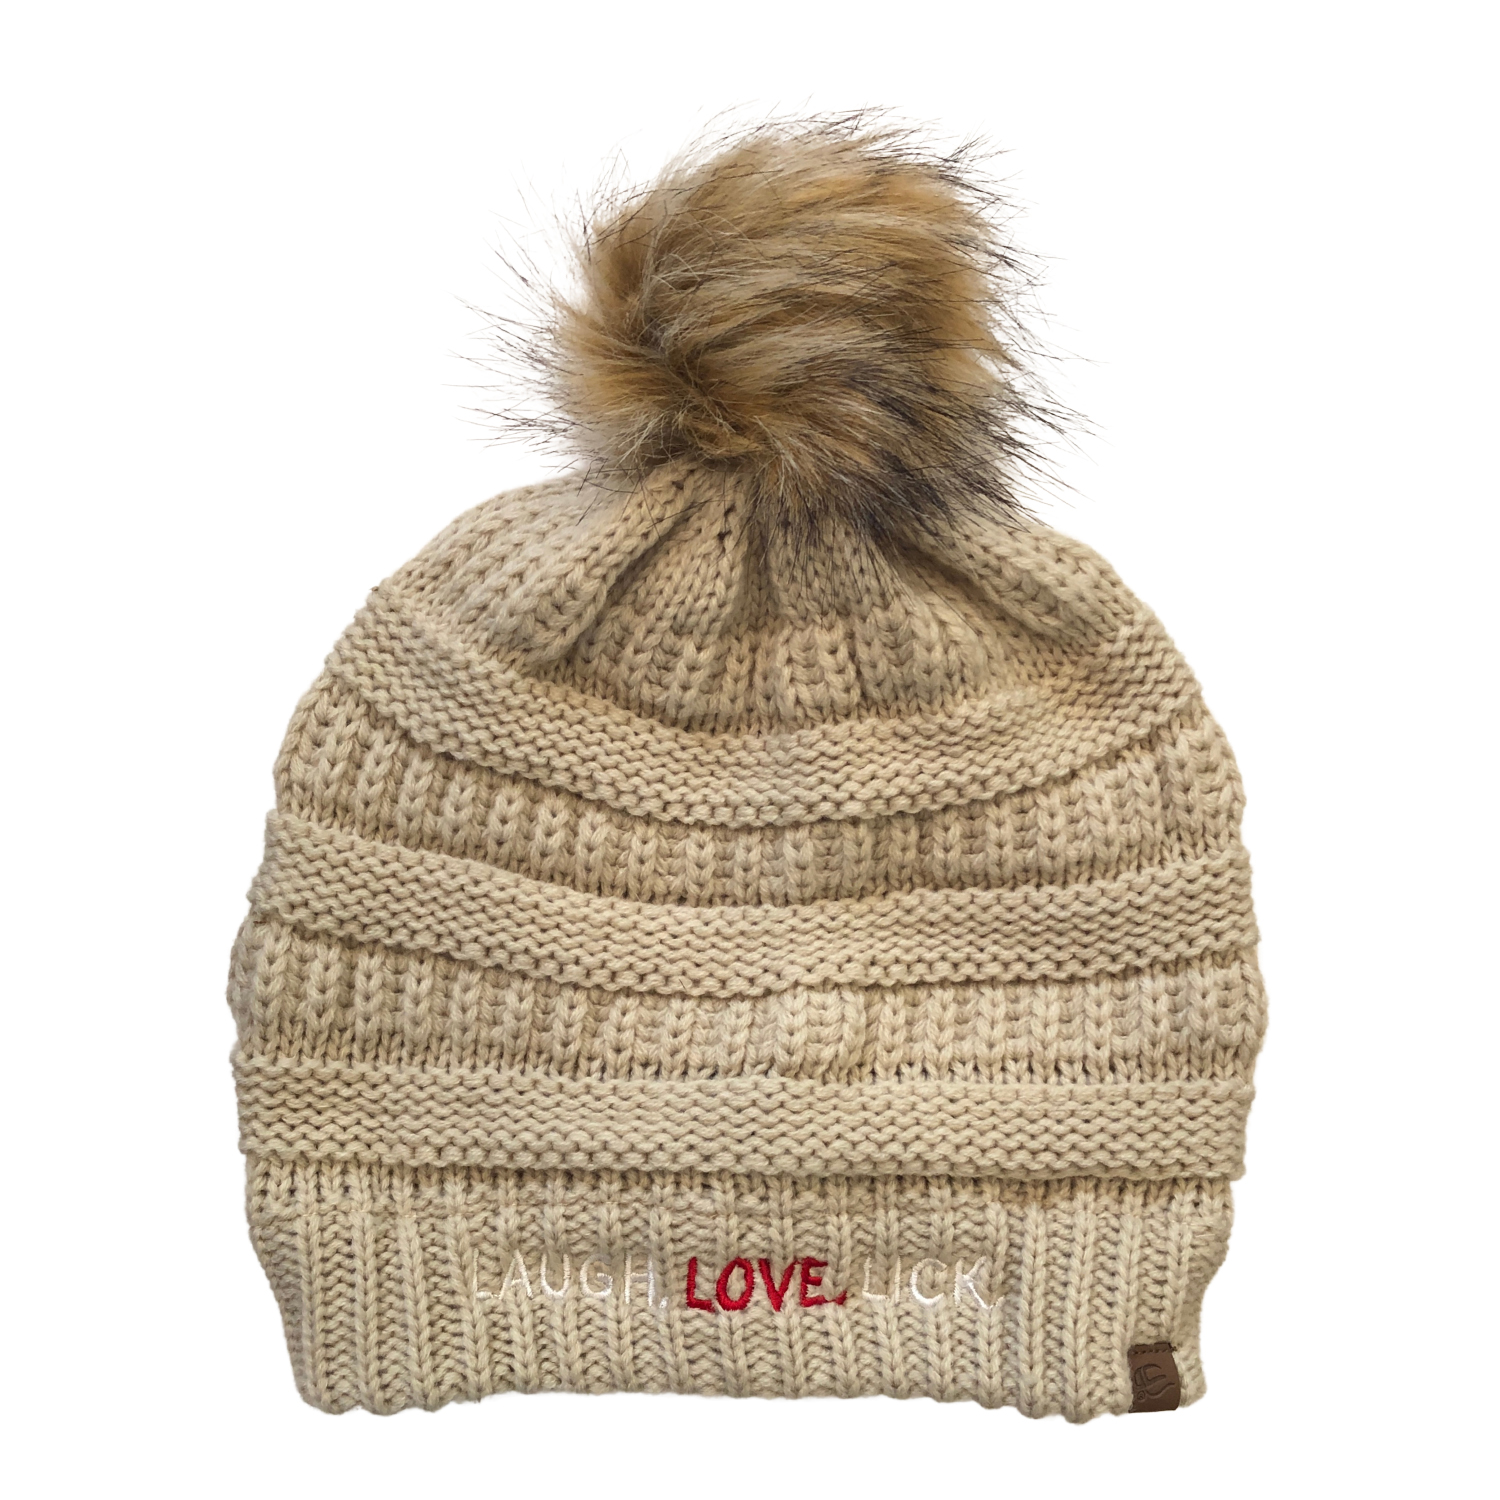 Beau Tyler - Laugh Love Lick winter knit hat faux pom tan 1 front temp